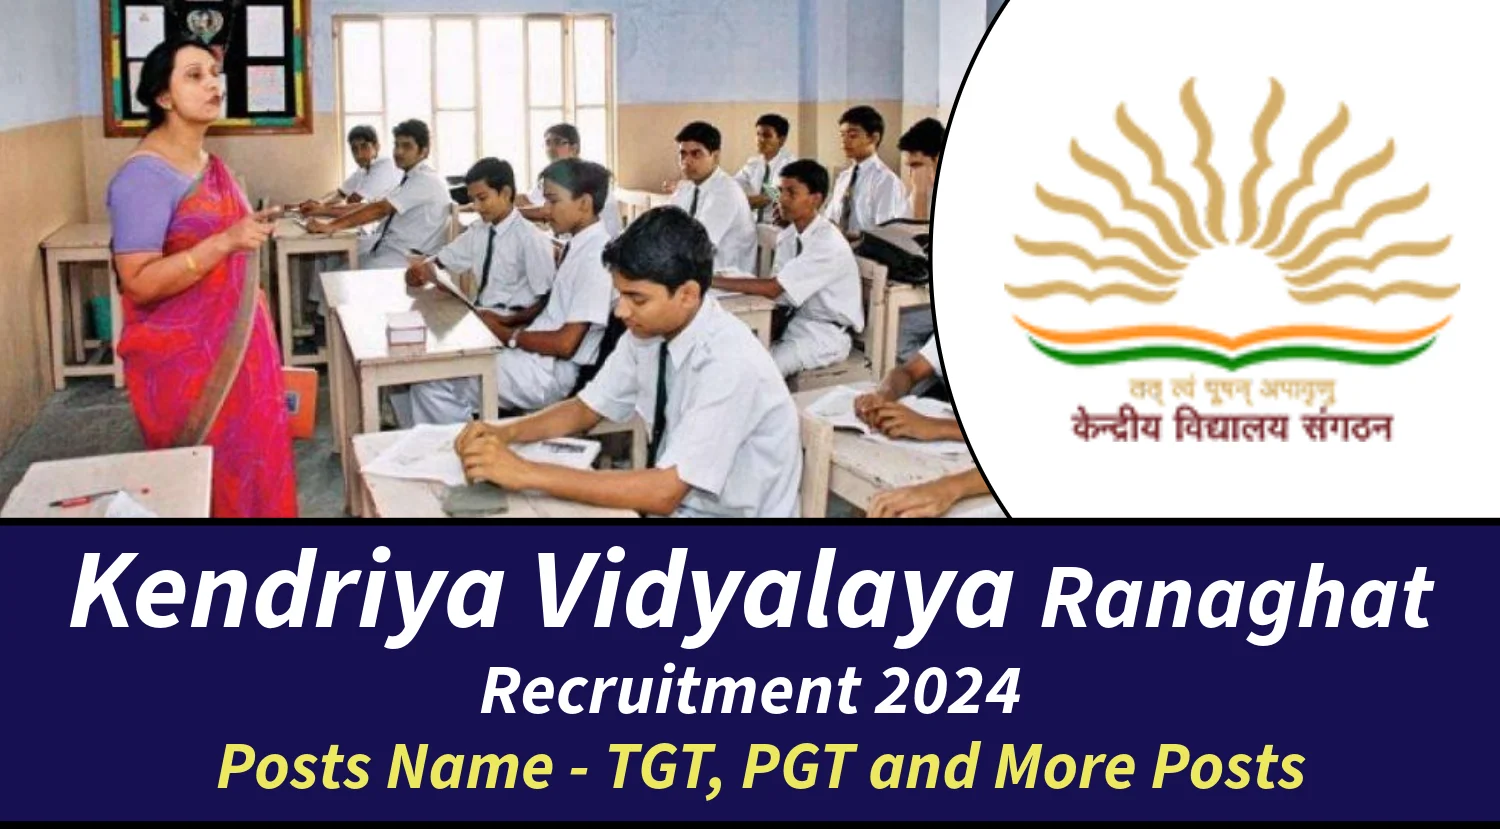 PM SHRI Kendriya Vidyalaya Ranaghat Recruitment 2024 Notification Out for TGT, PGT, and More Posts